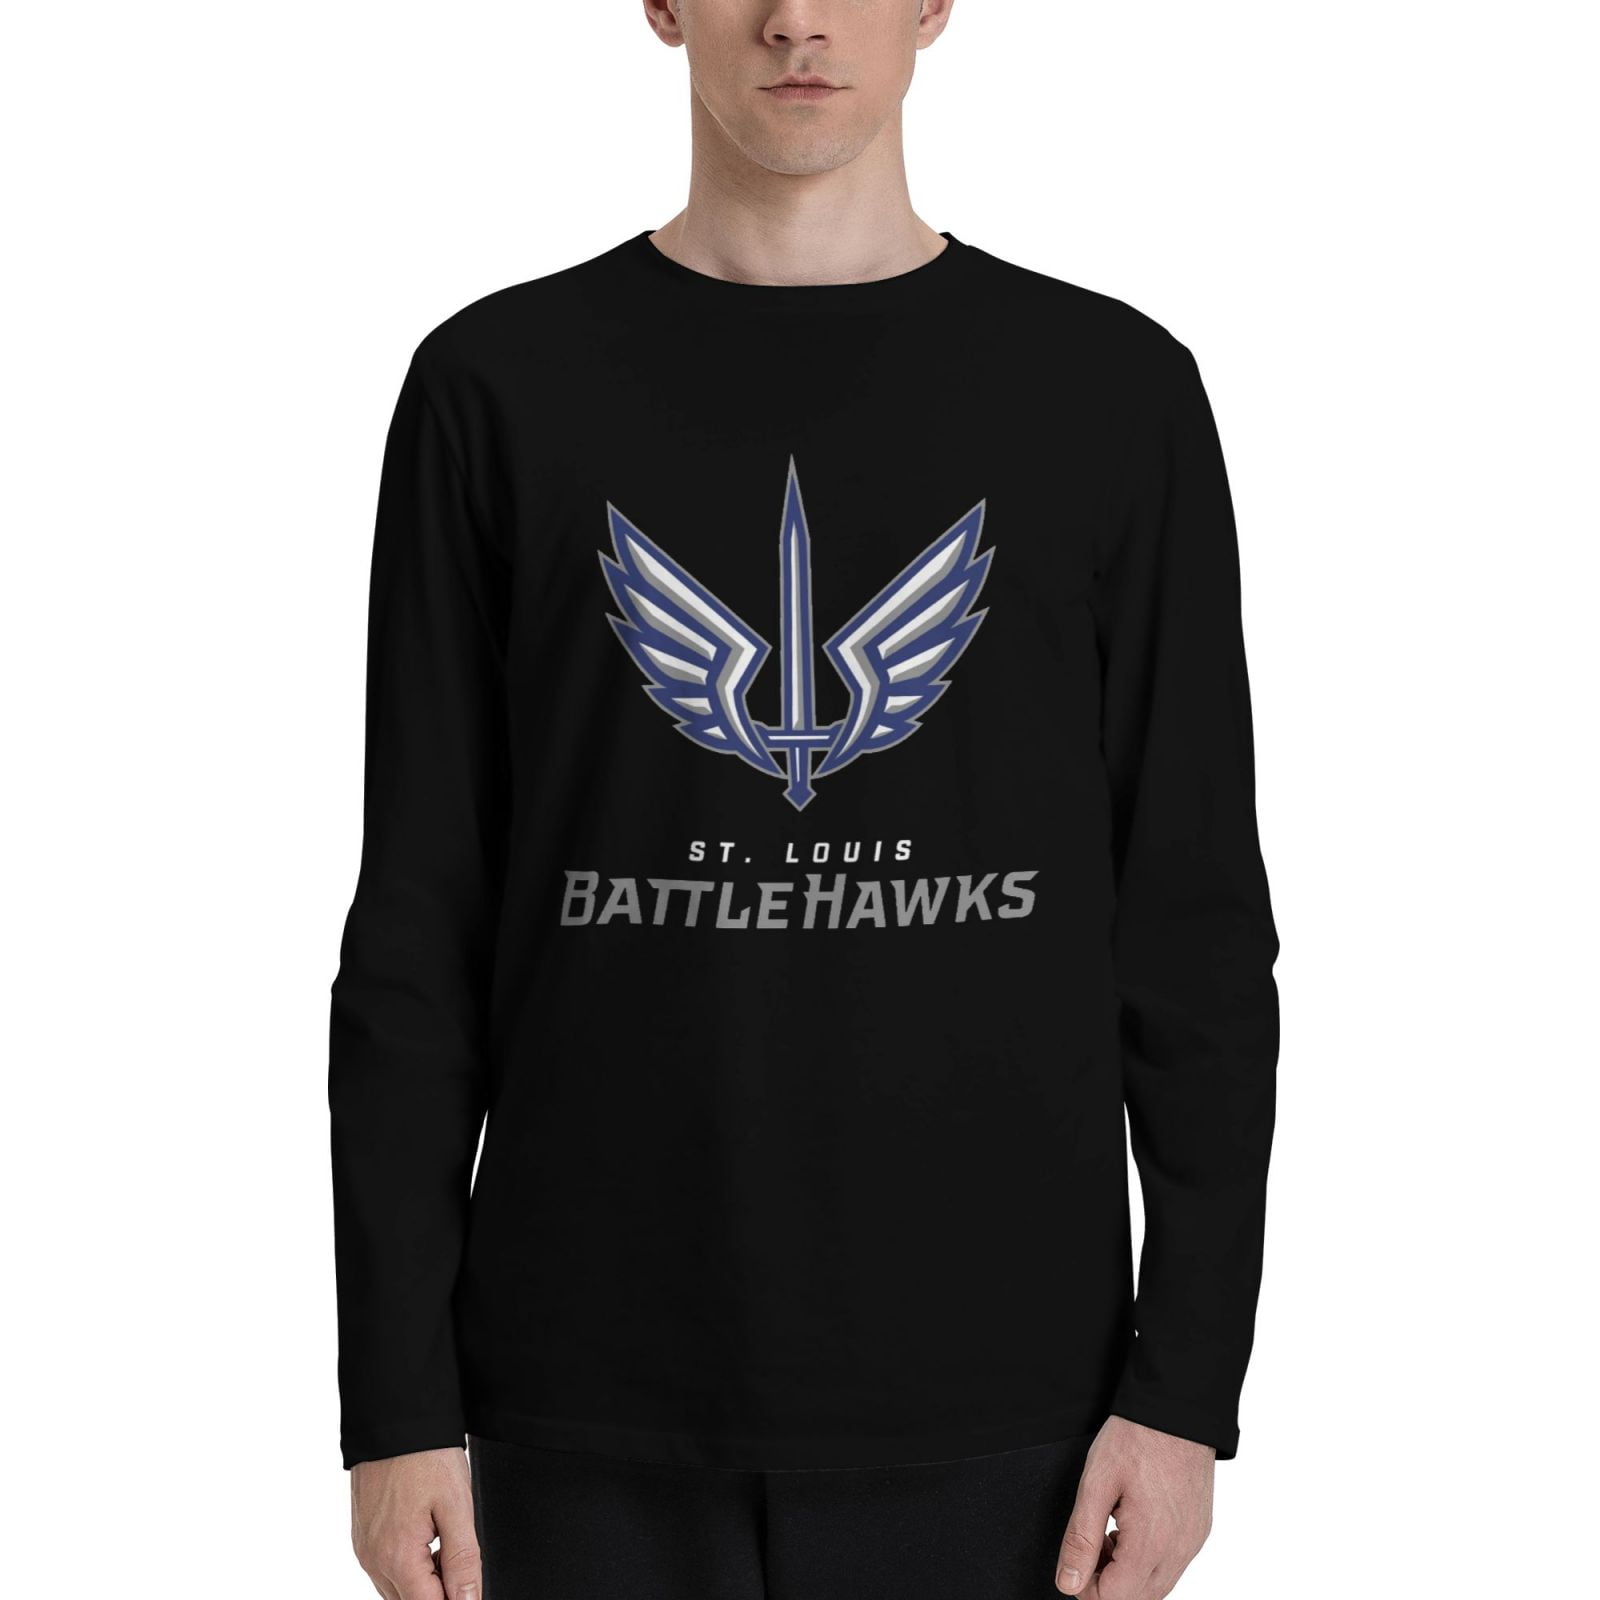 St. Louis BattleHawks Men's Basic Short Sleeve T-Shirt Black Large